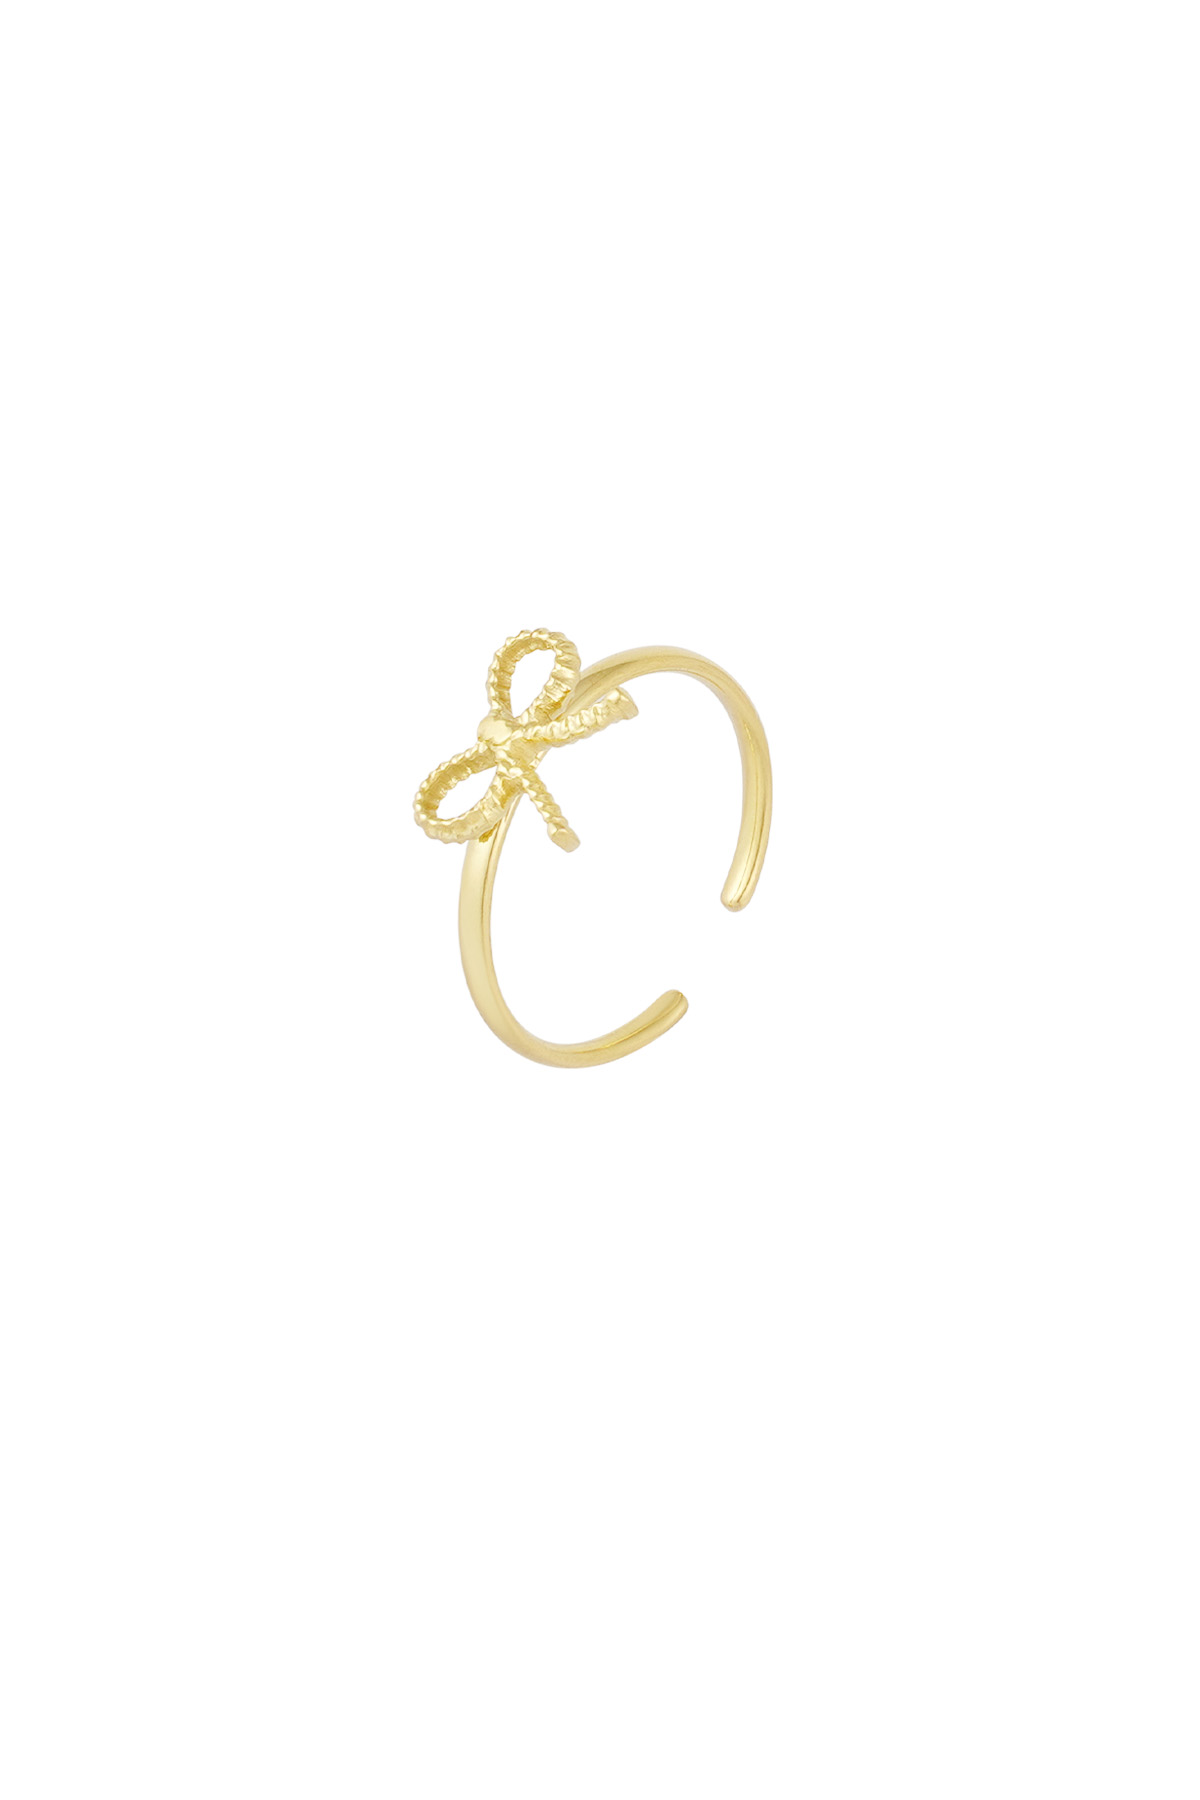 Ring bow basic - gold